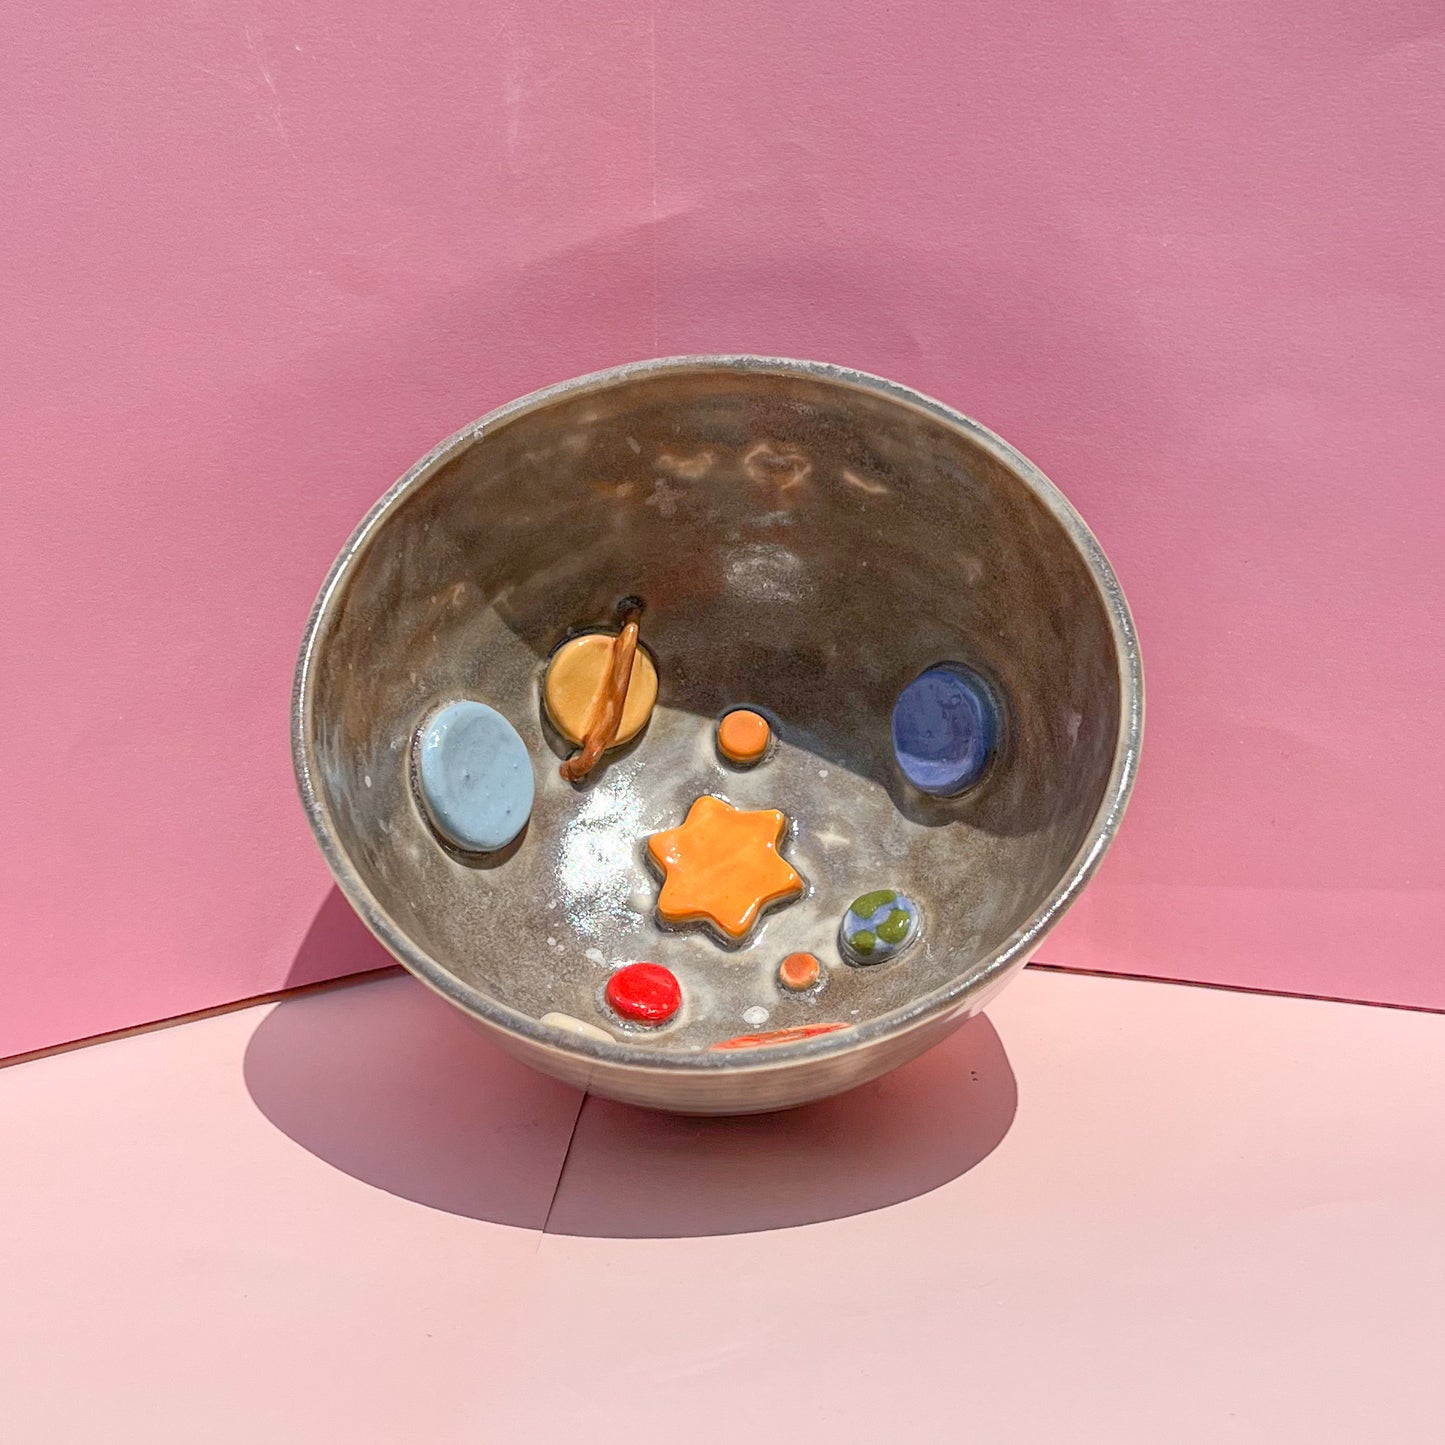 Seconds solar system bowl